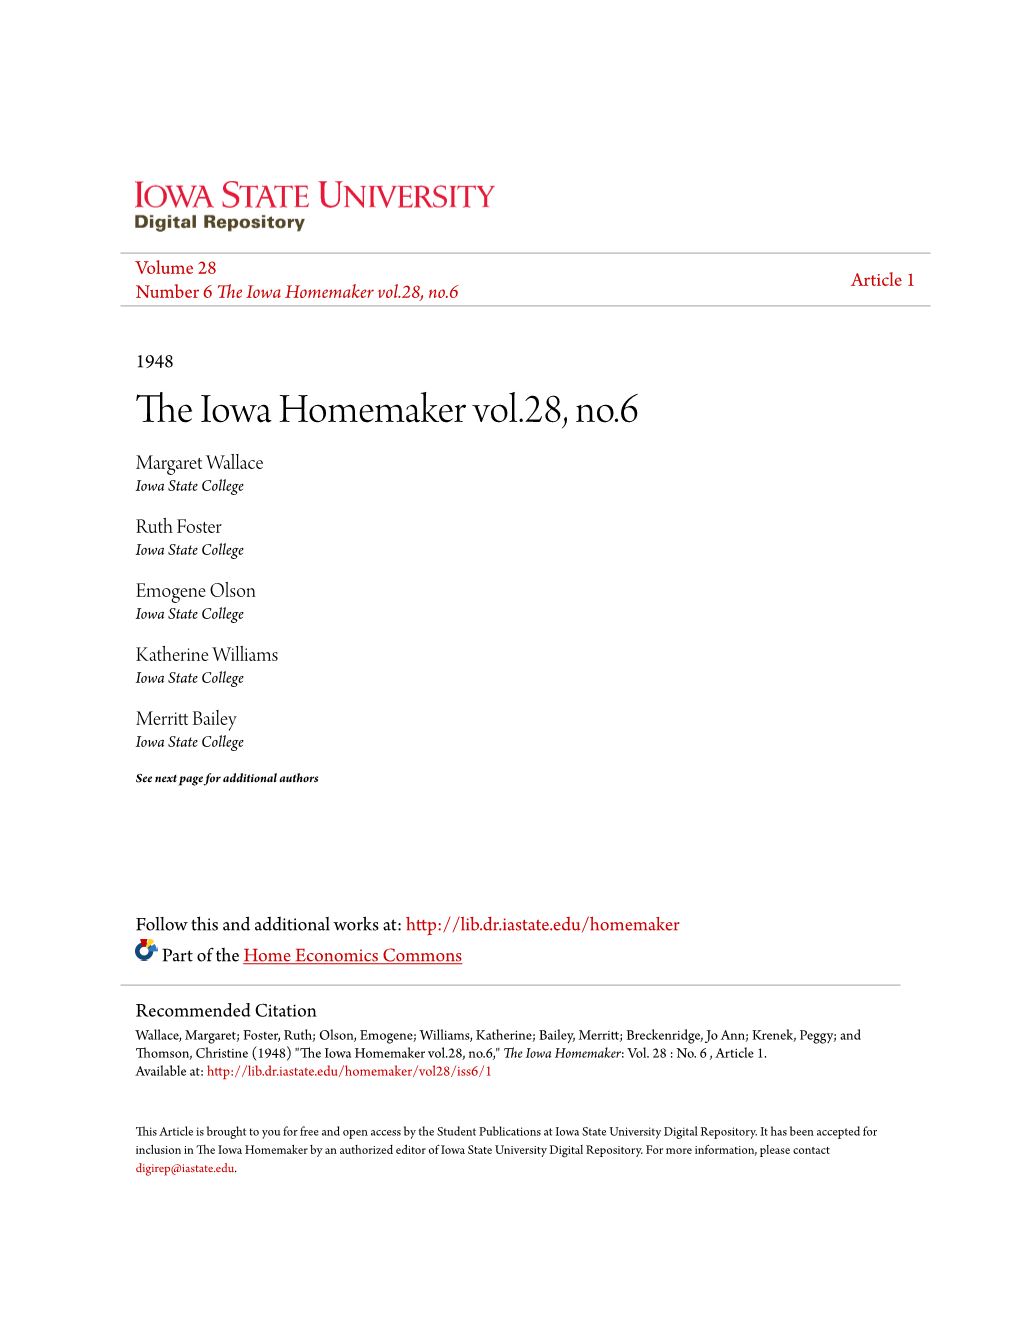 The Iowa Homemaker Vol.28, No.6